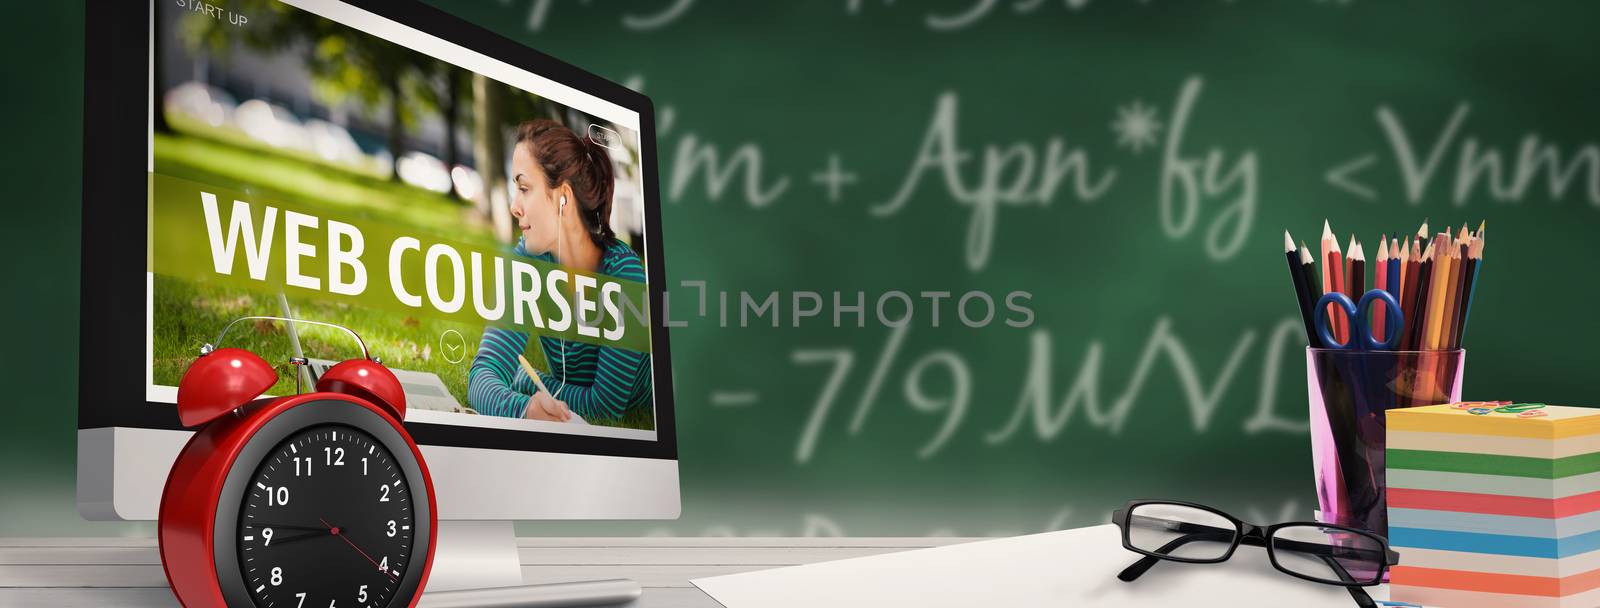 Computer screen against green chalkboard